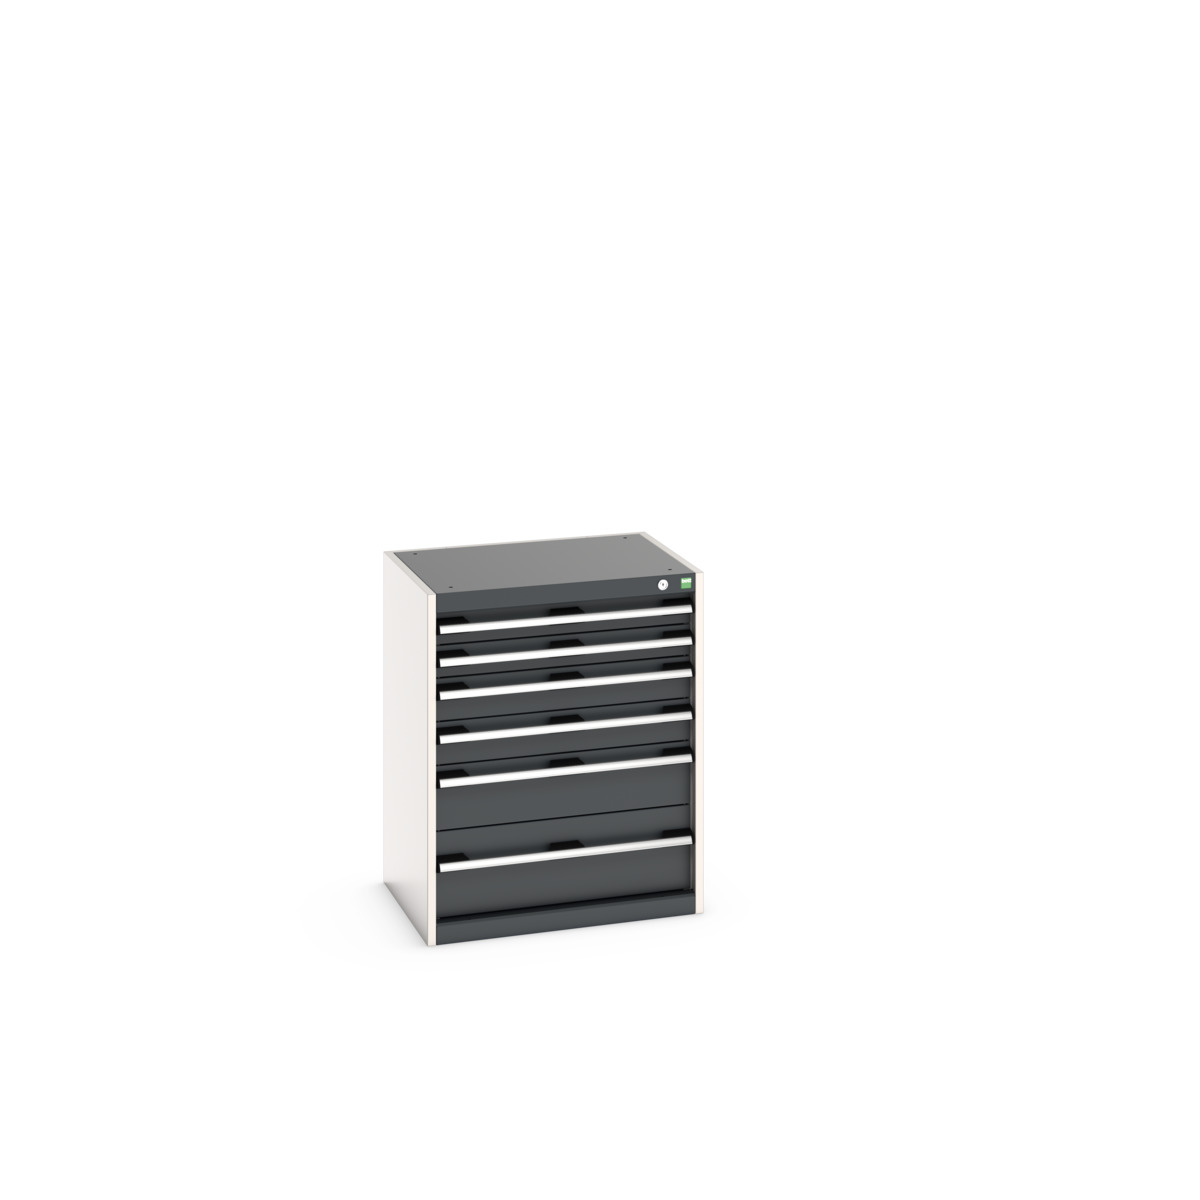 40011047. - cubio drawer cabinet